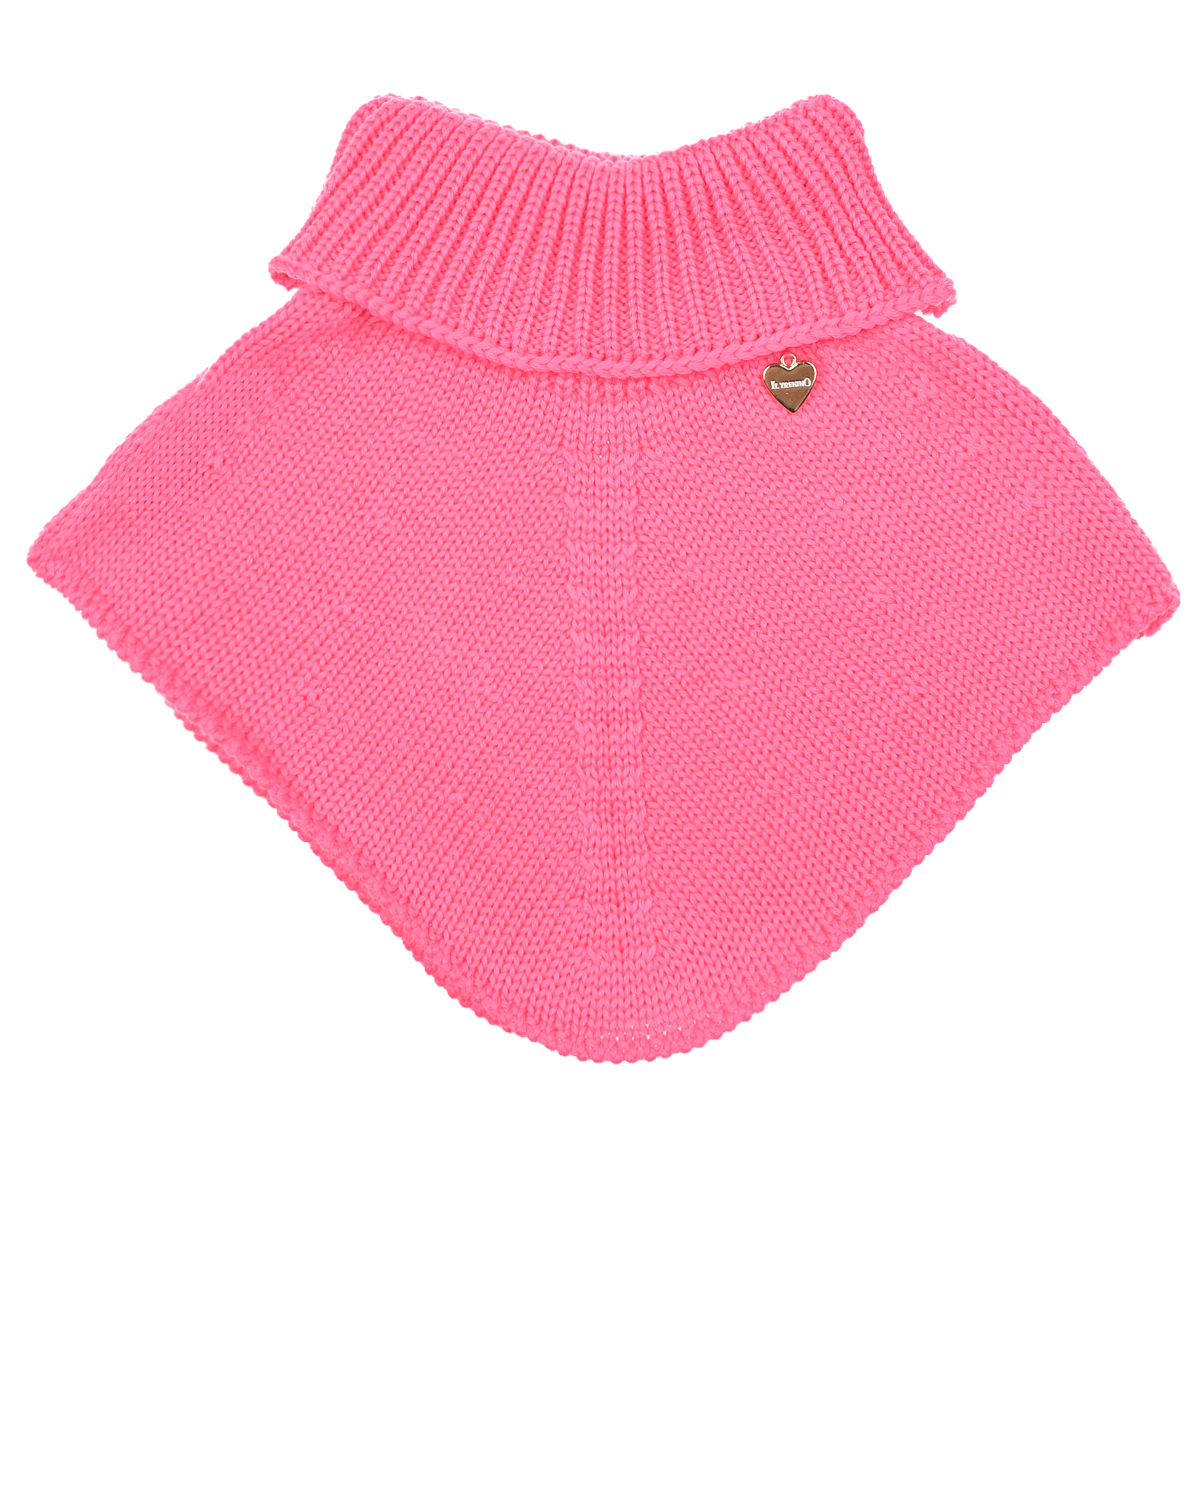 Розовый шарф-горло из шерсти Il Trenino детский, размер unica